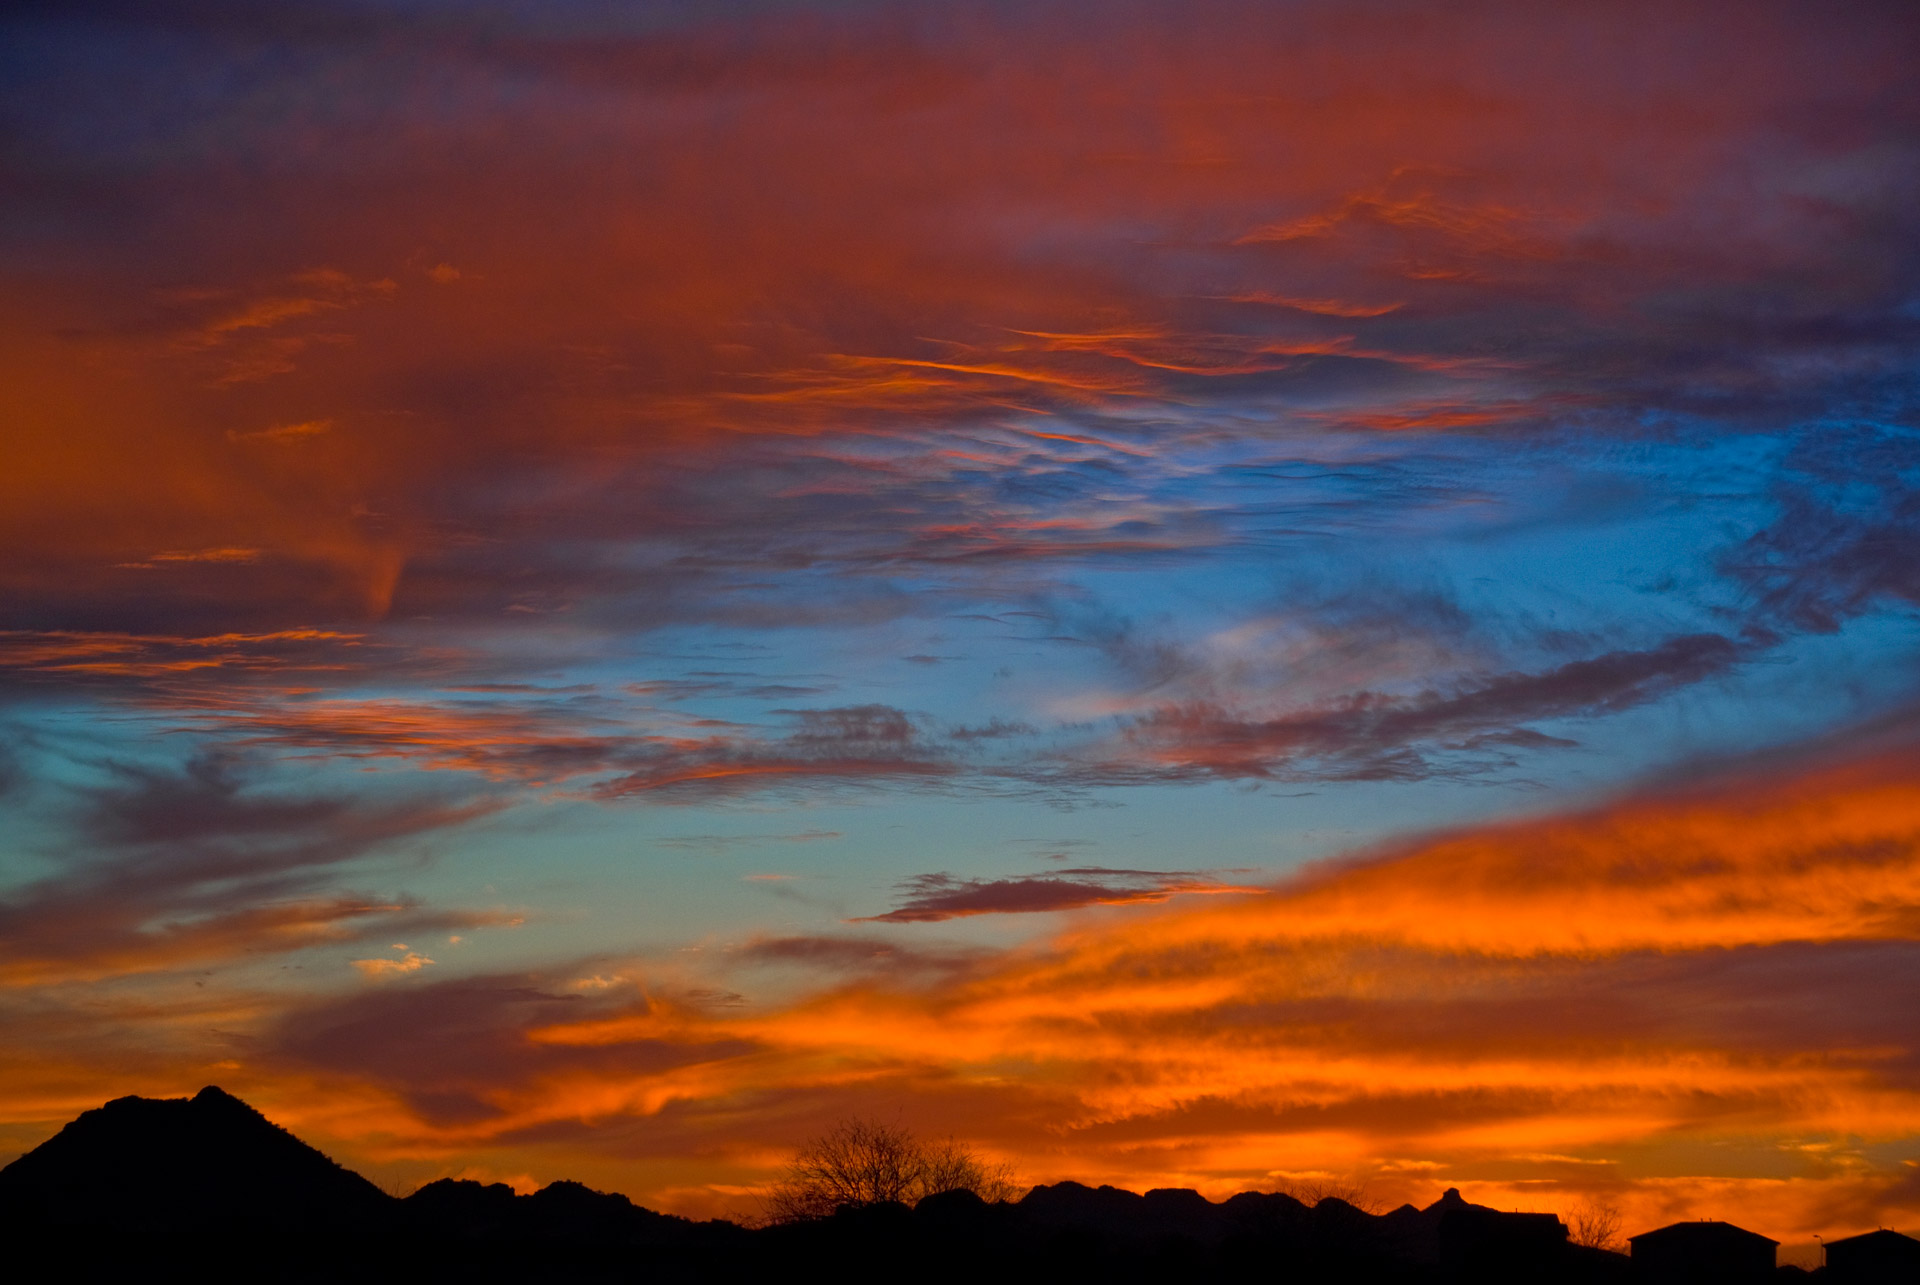 sunset desert mountains free photo